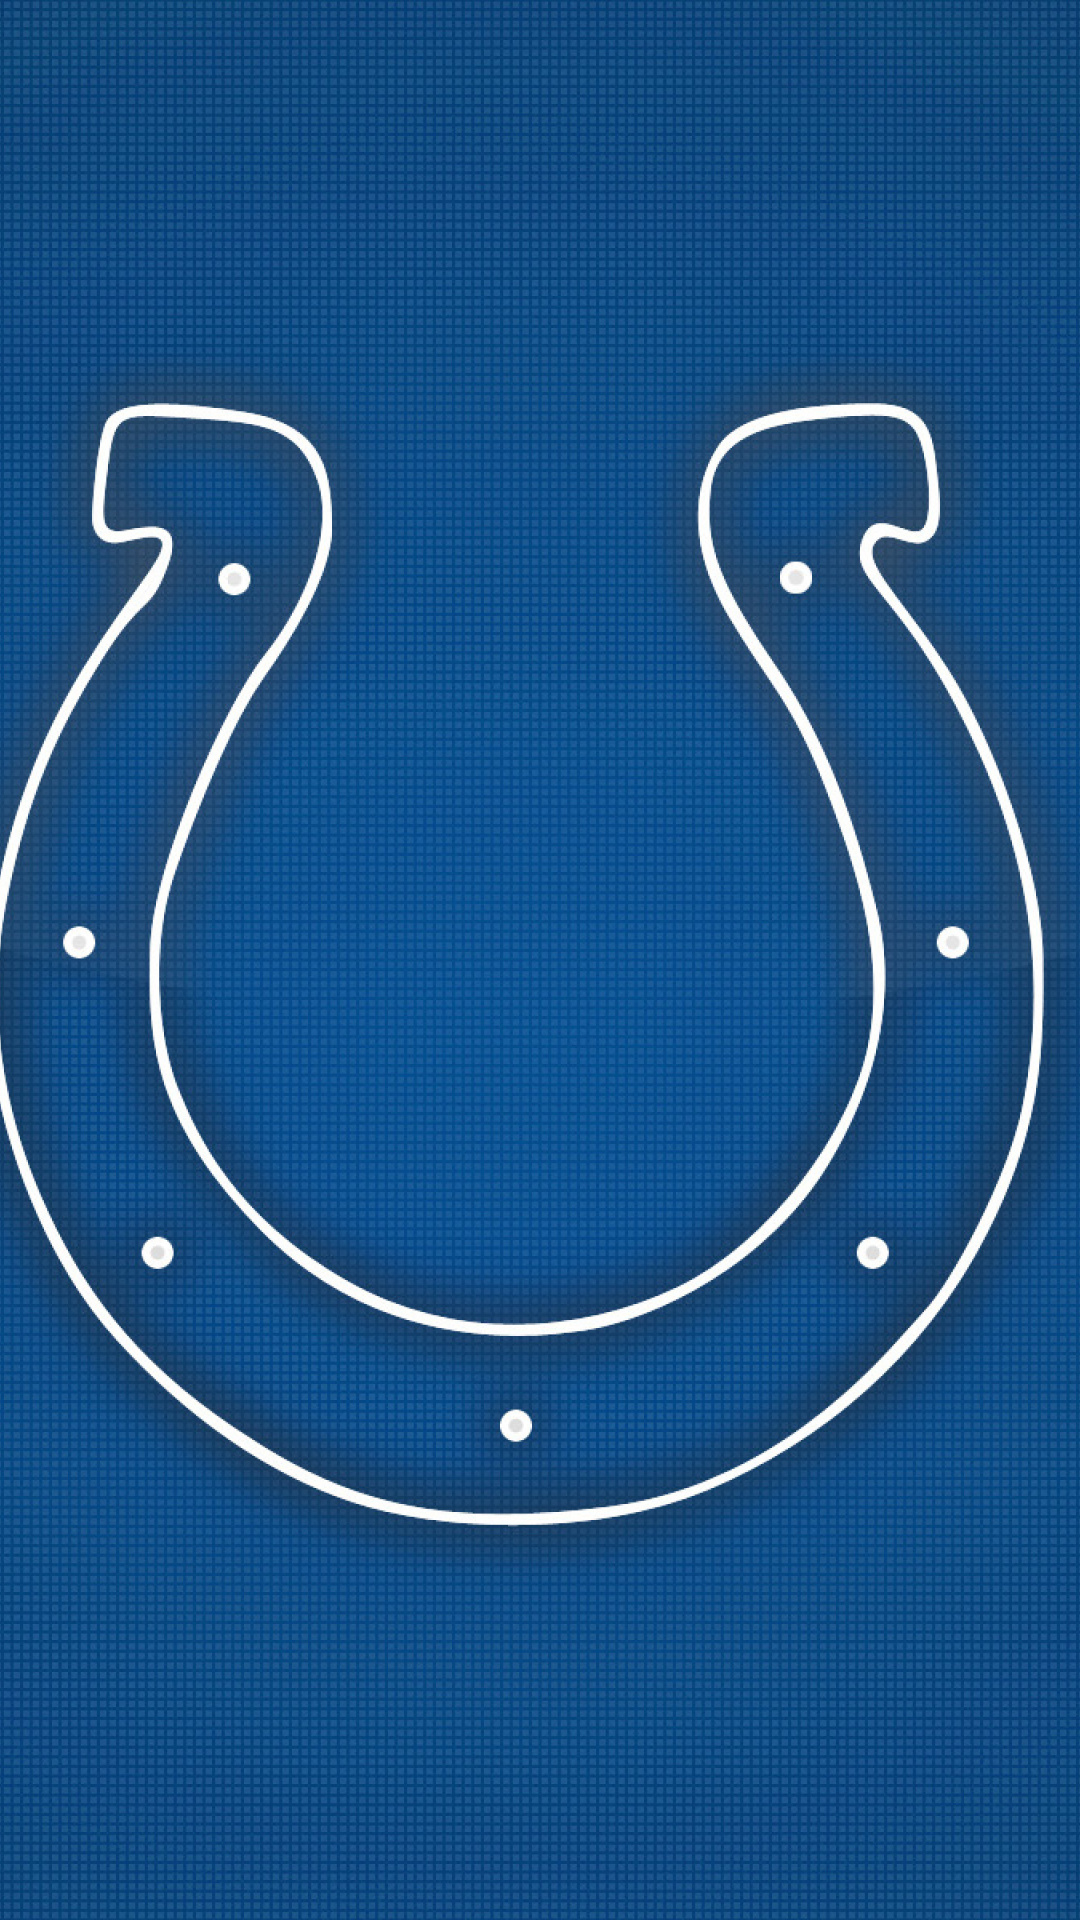 Indianapolis Colts NFL wallpaper 1080x1920